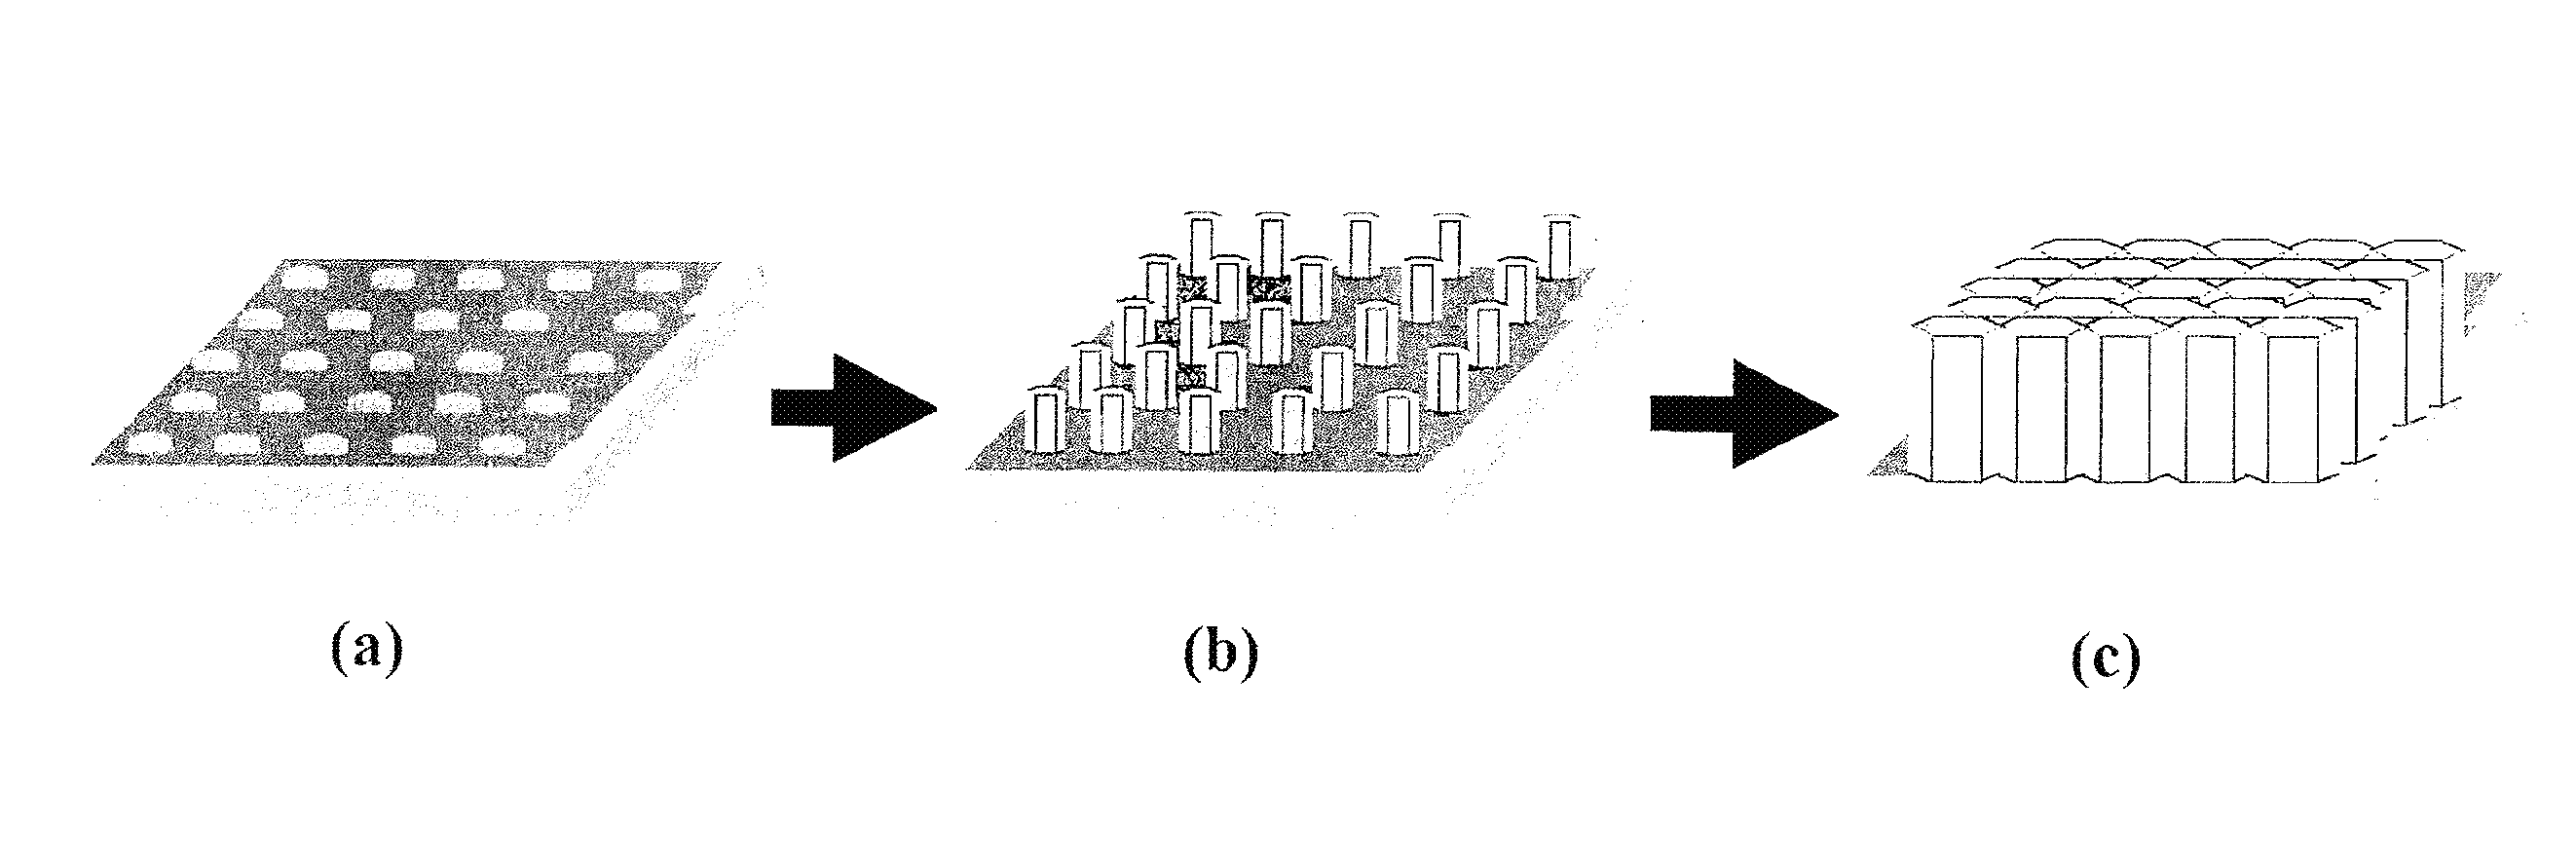 Ion/proton-conducting apparatus and method